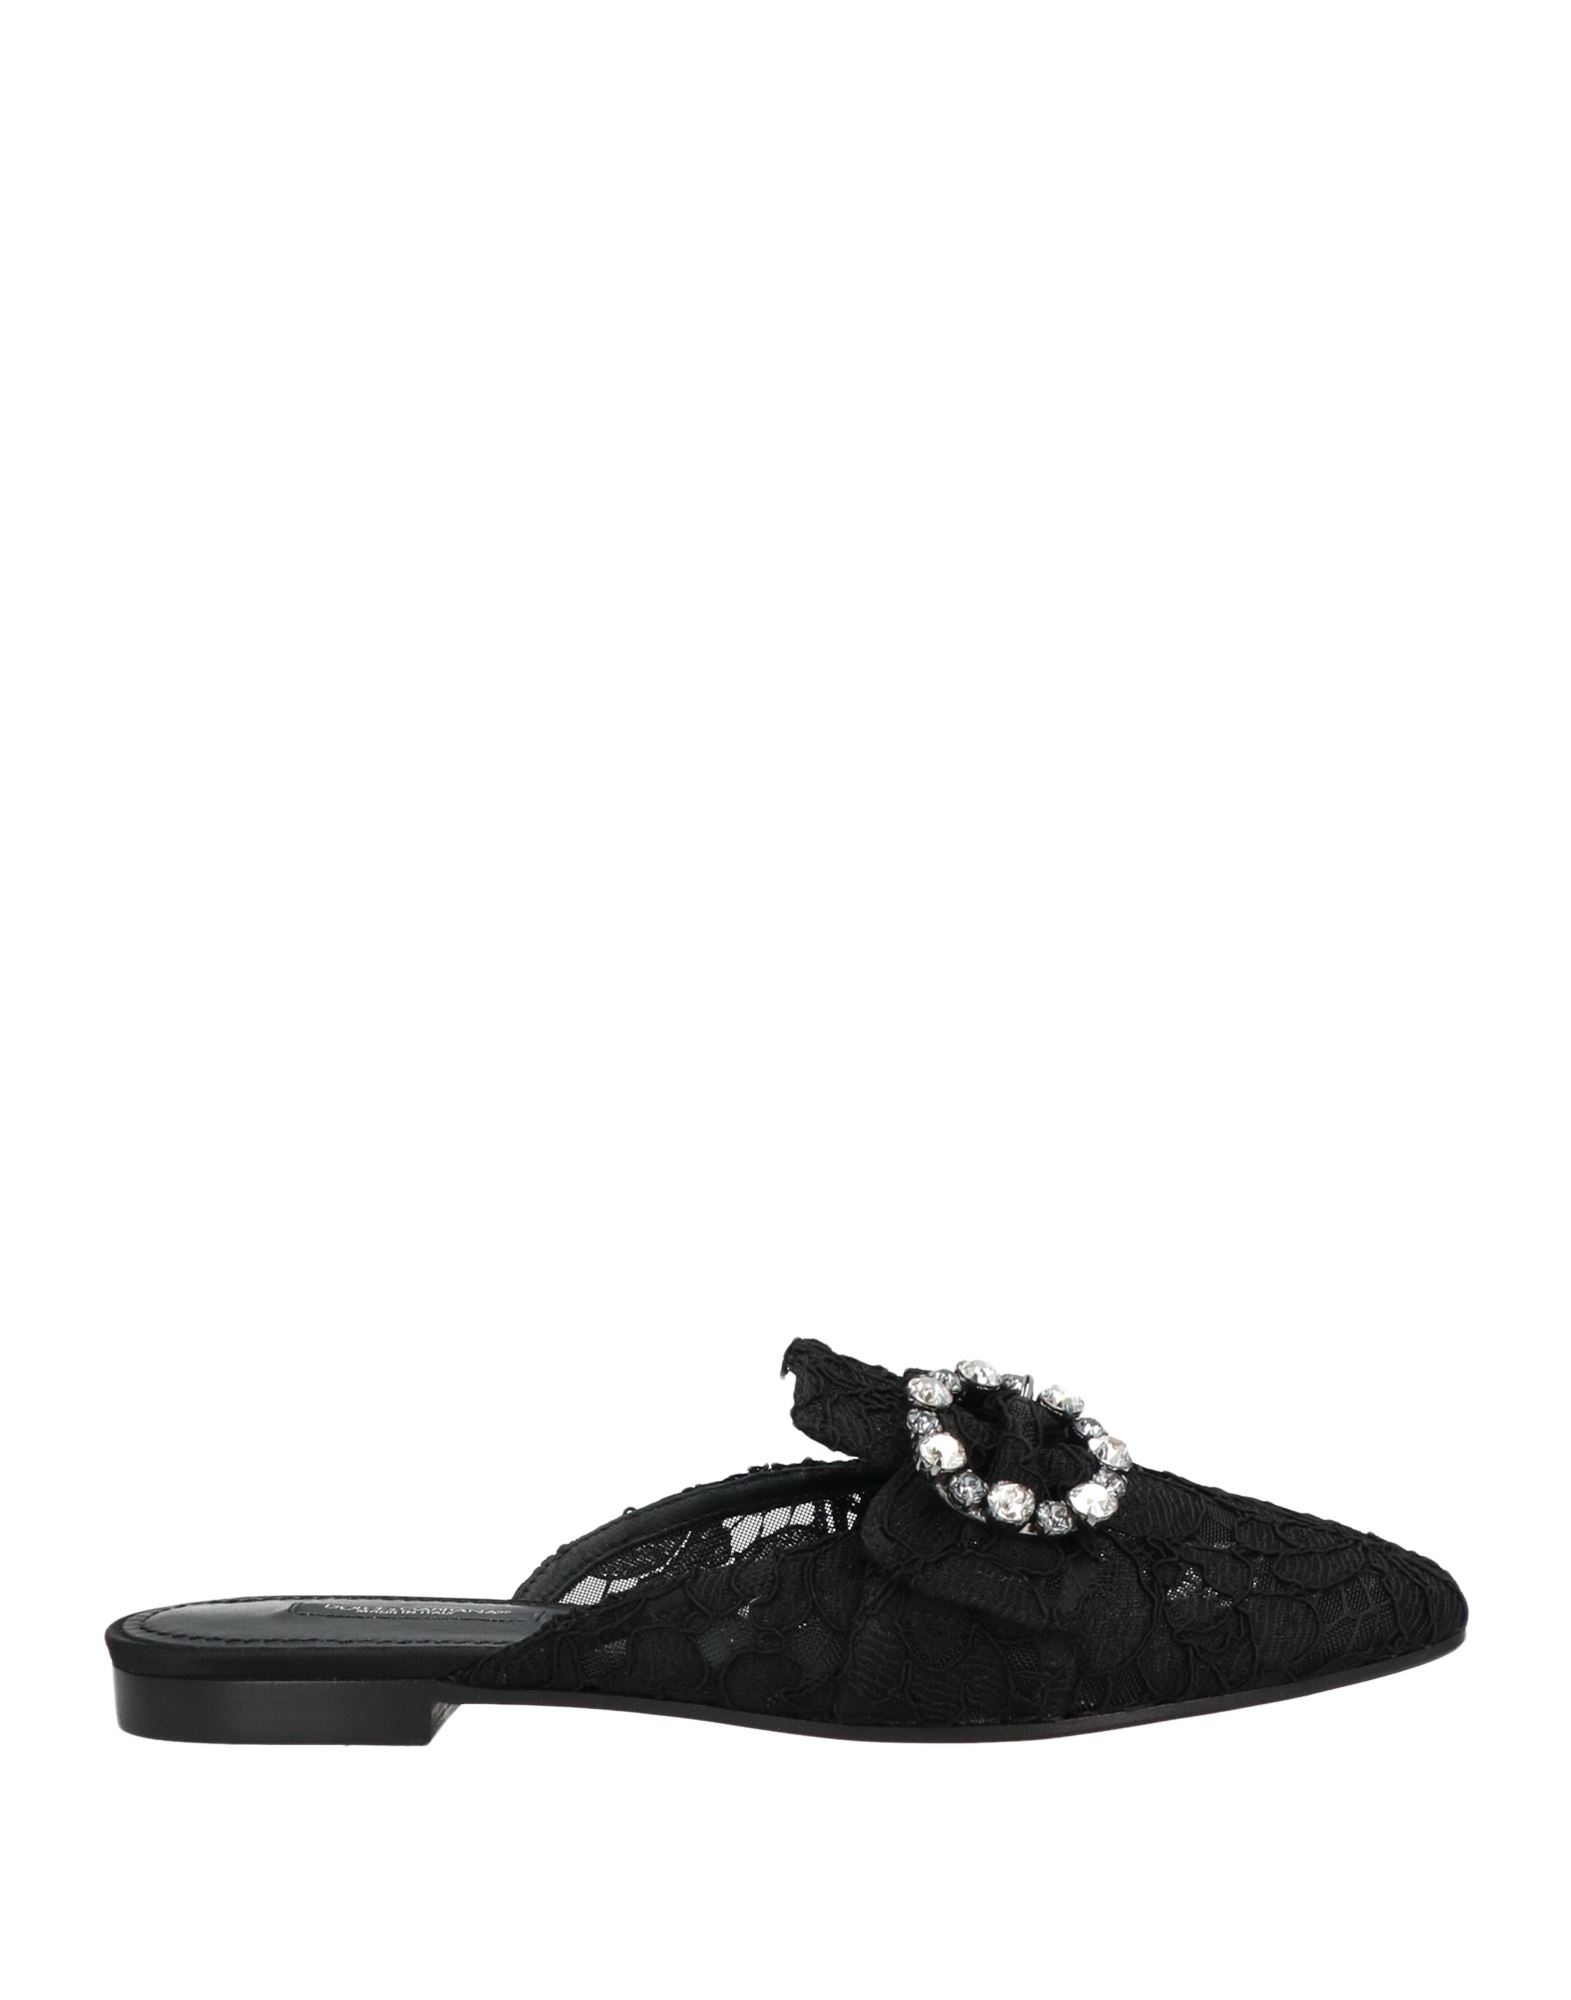 Dolce & Gabbana Woman Mules & Clogs Black Size 5 Textile Fibers